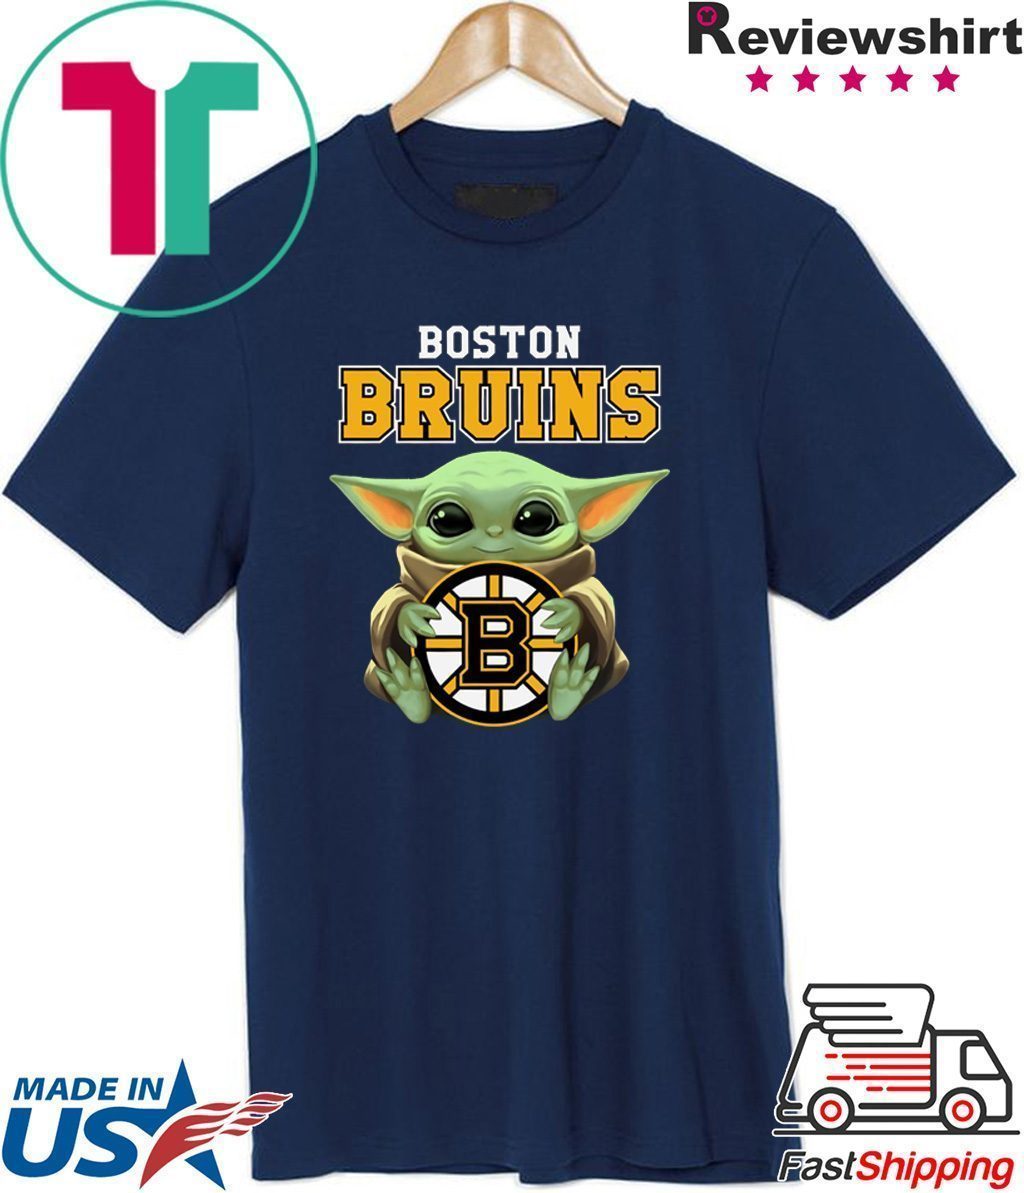 boston bruins tee shirts